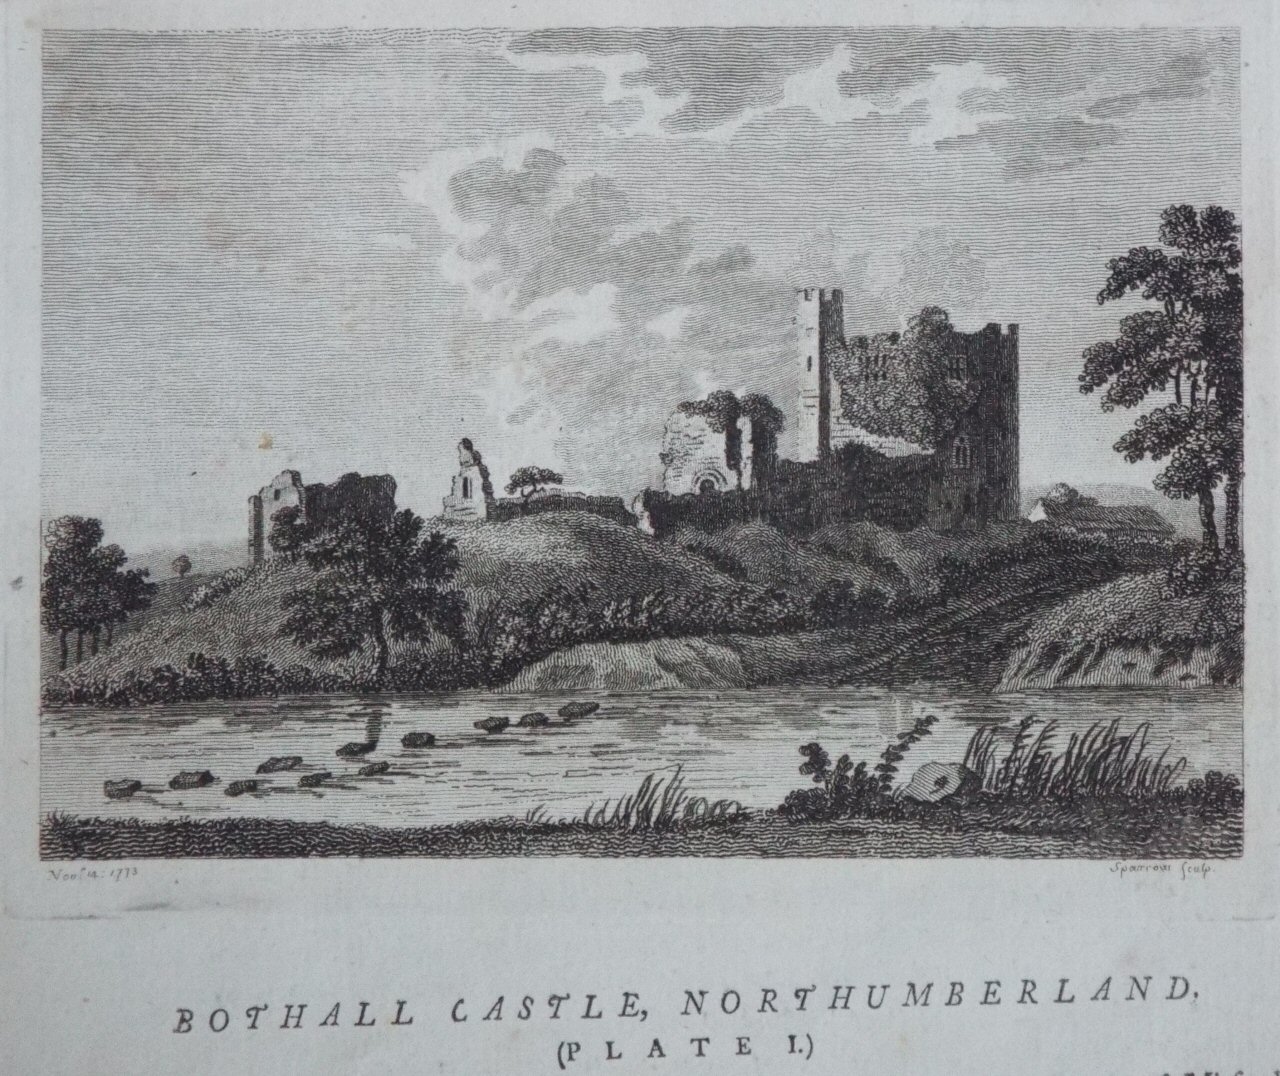 Print - Bothall Castle, Northumberland. (Plate I.) - 